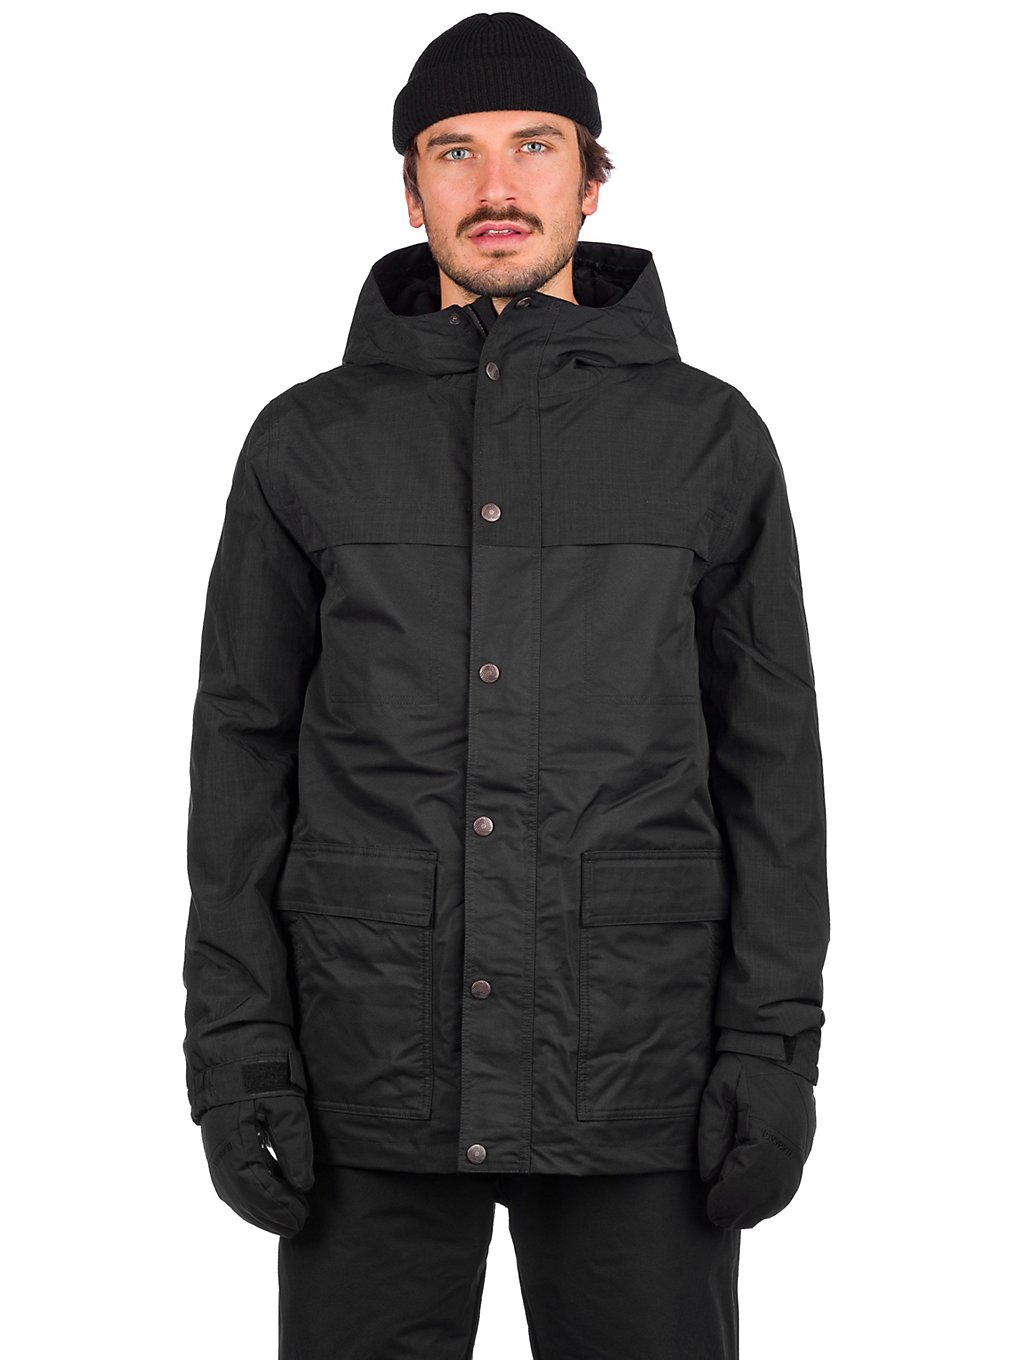 Aperture Pigtail Jacket black kaufen